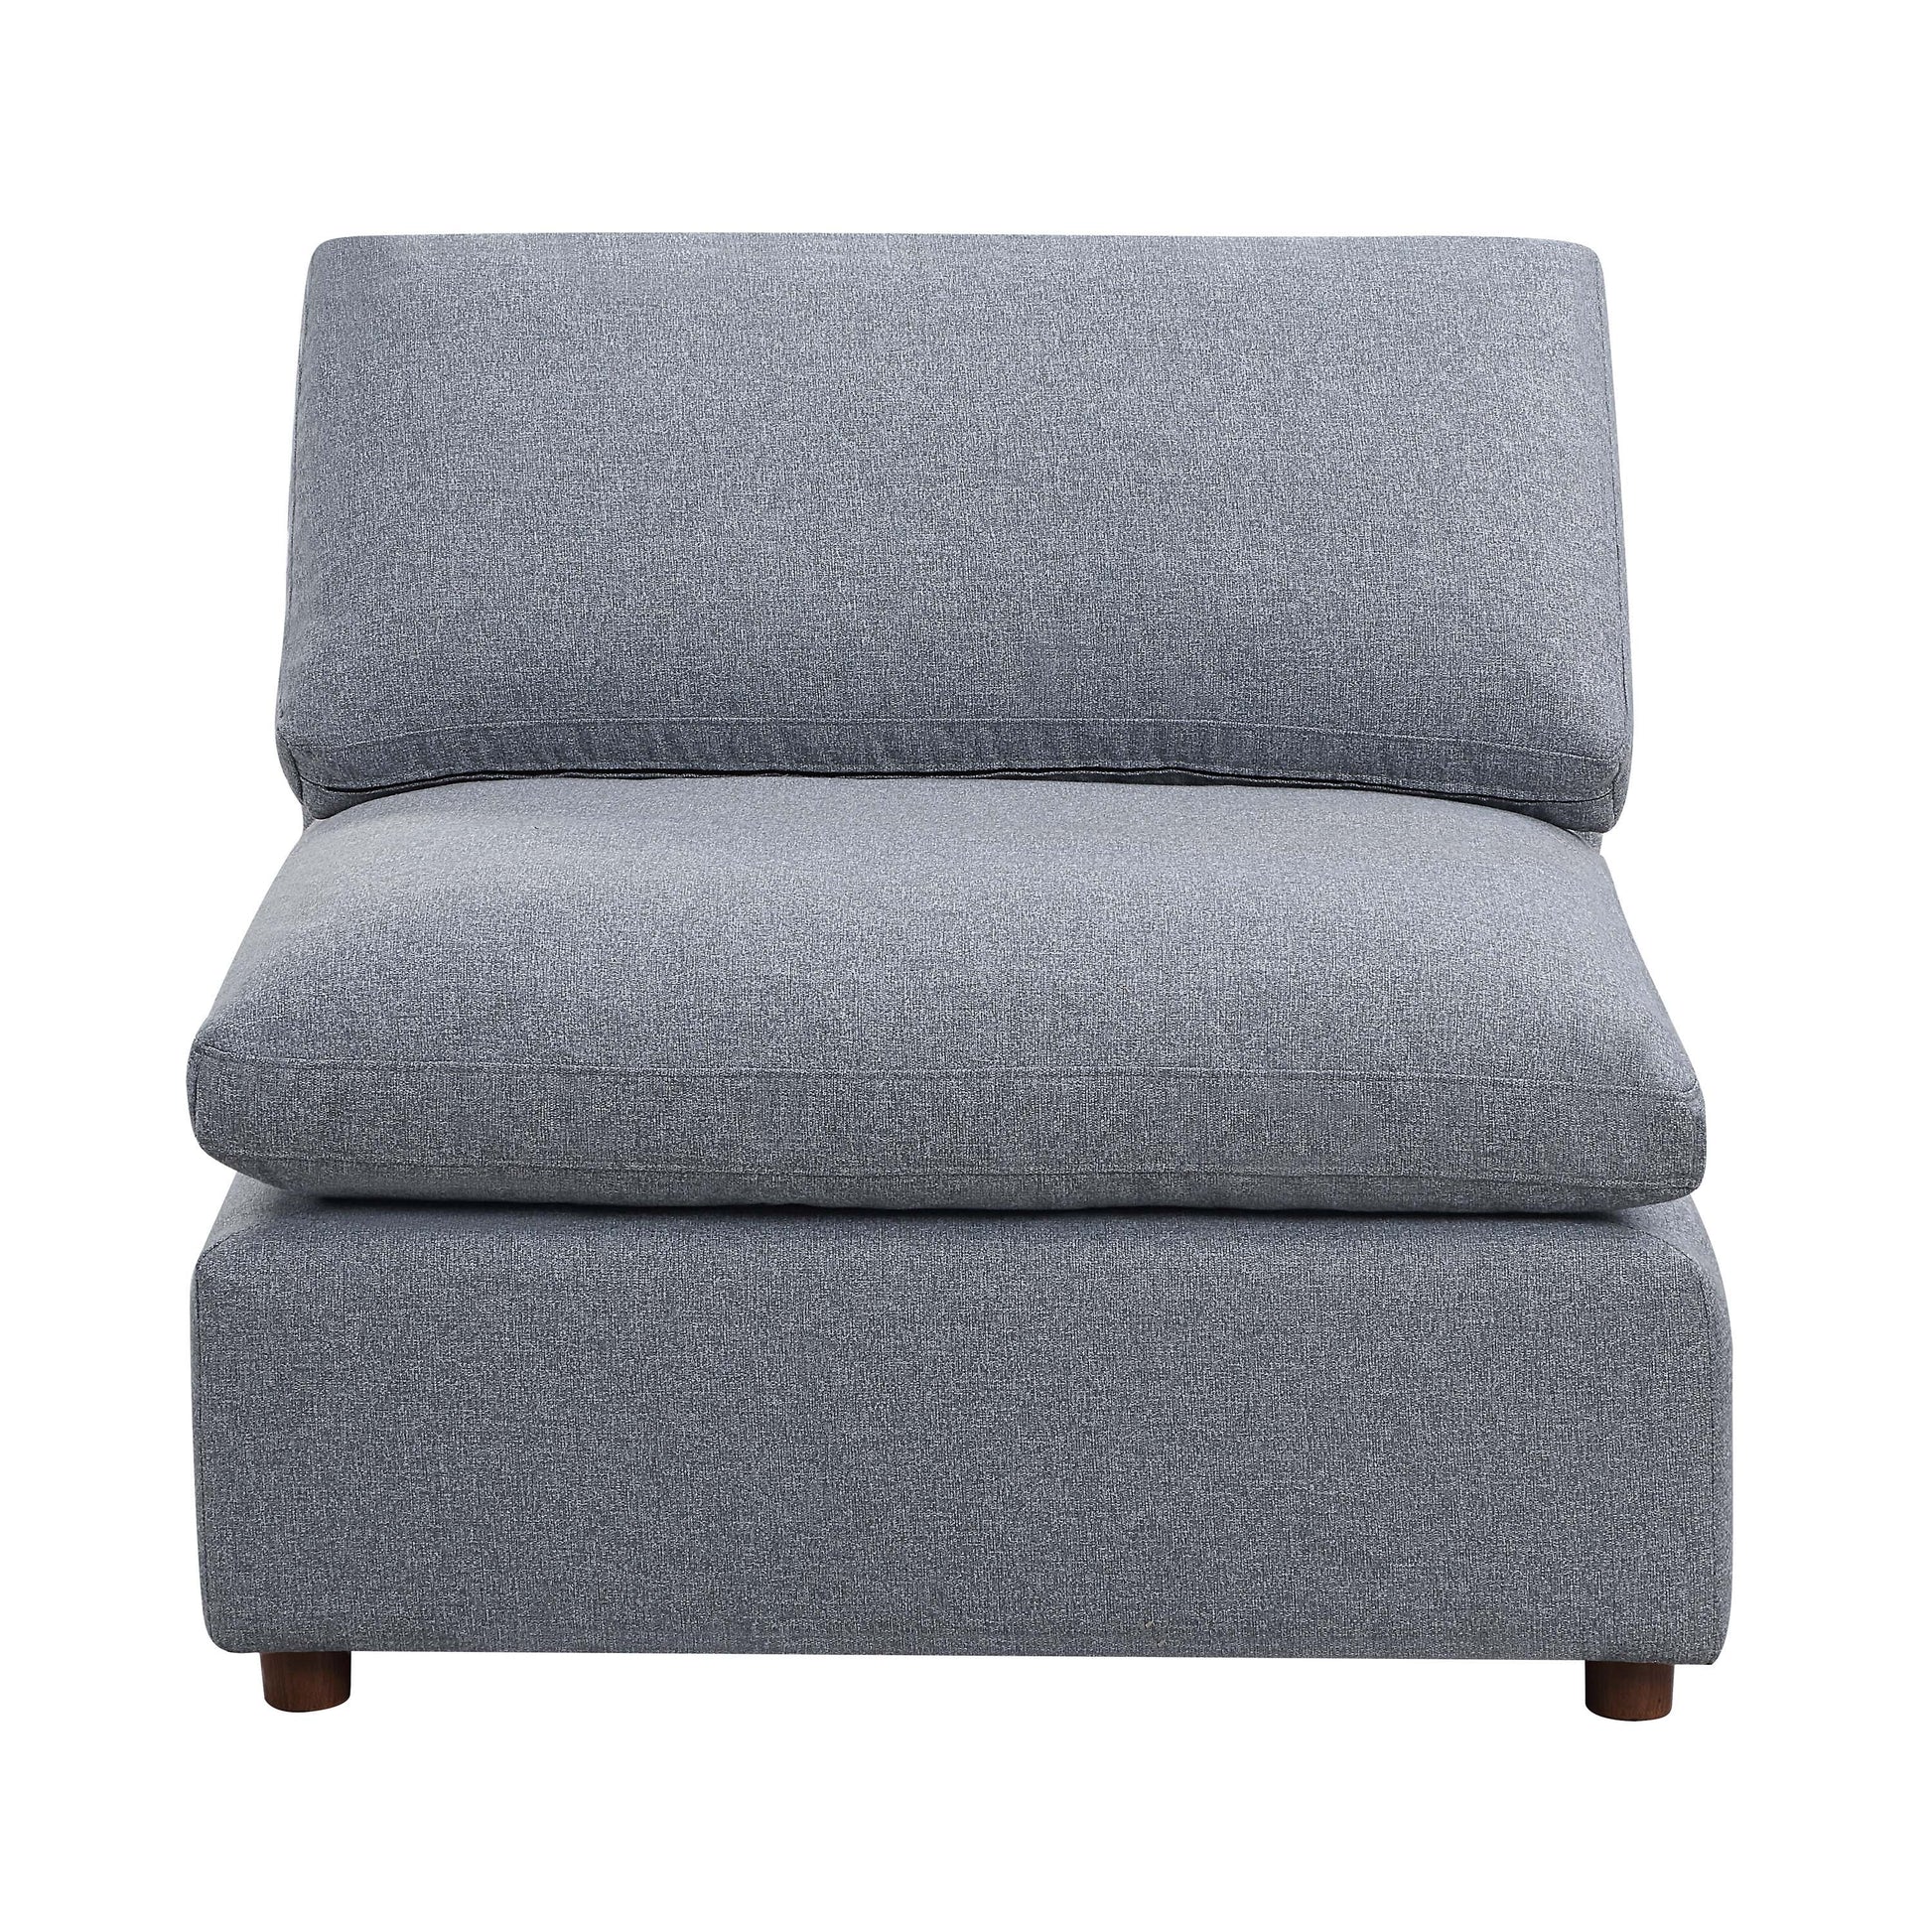 Modern Modular Sectional Sofa Set, Self-customization Design Sofa, Grey - Enova Luxe Home Store